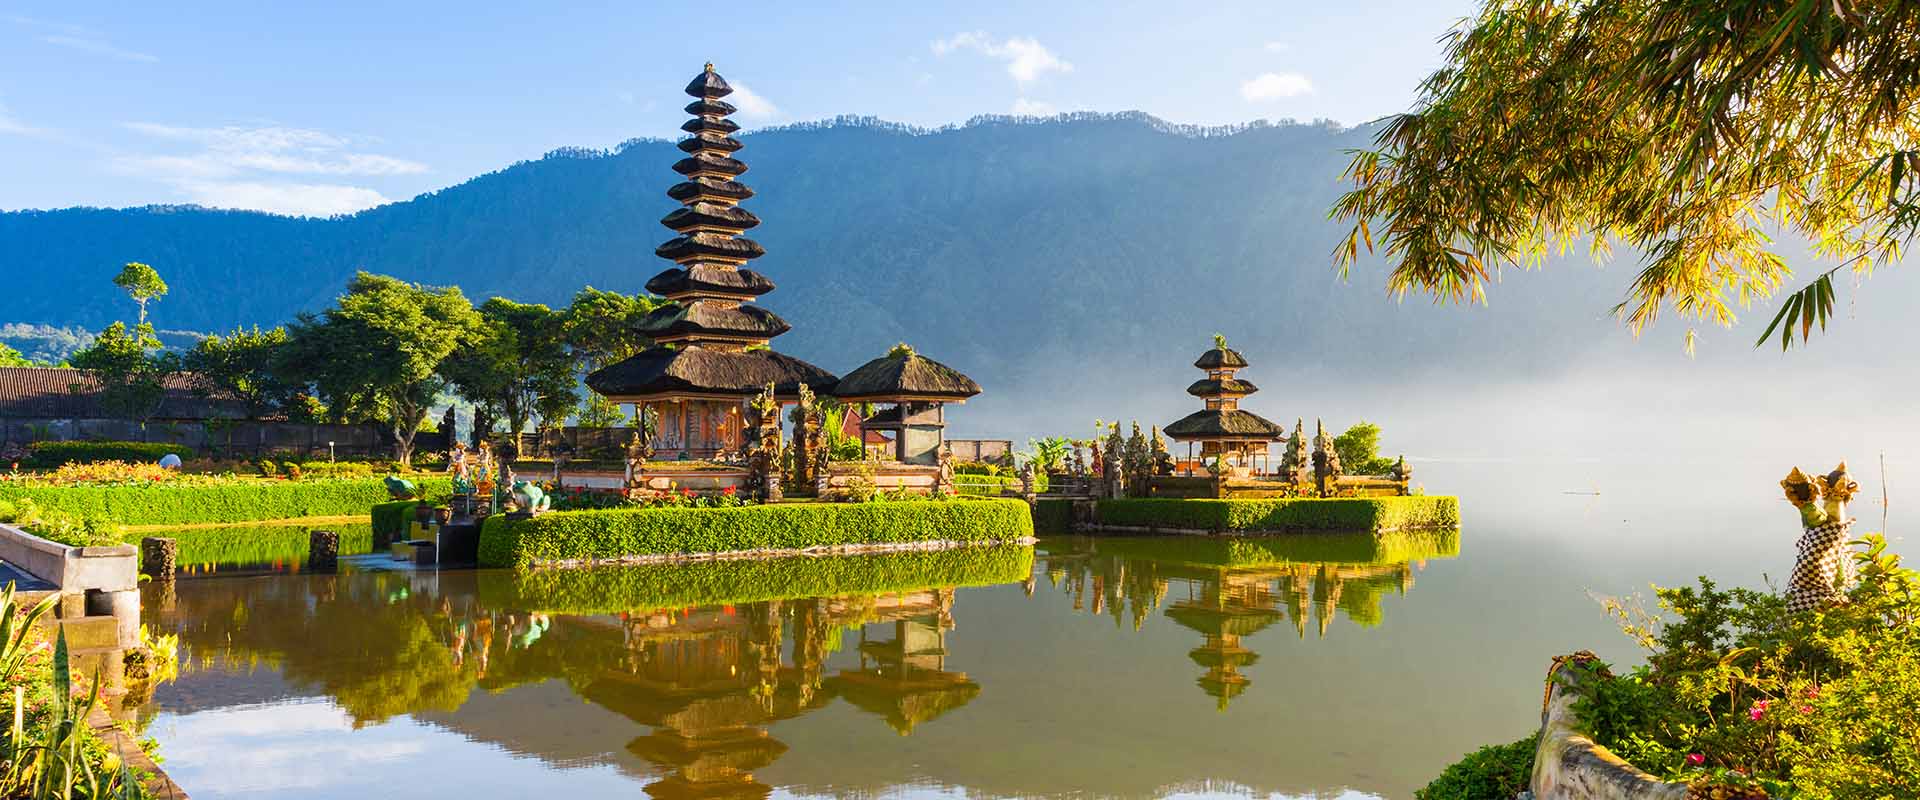 Crociere Avventura a Bali